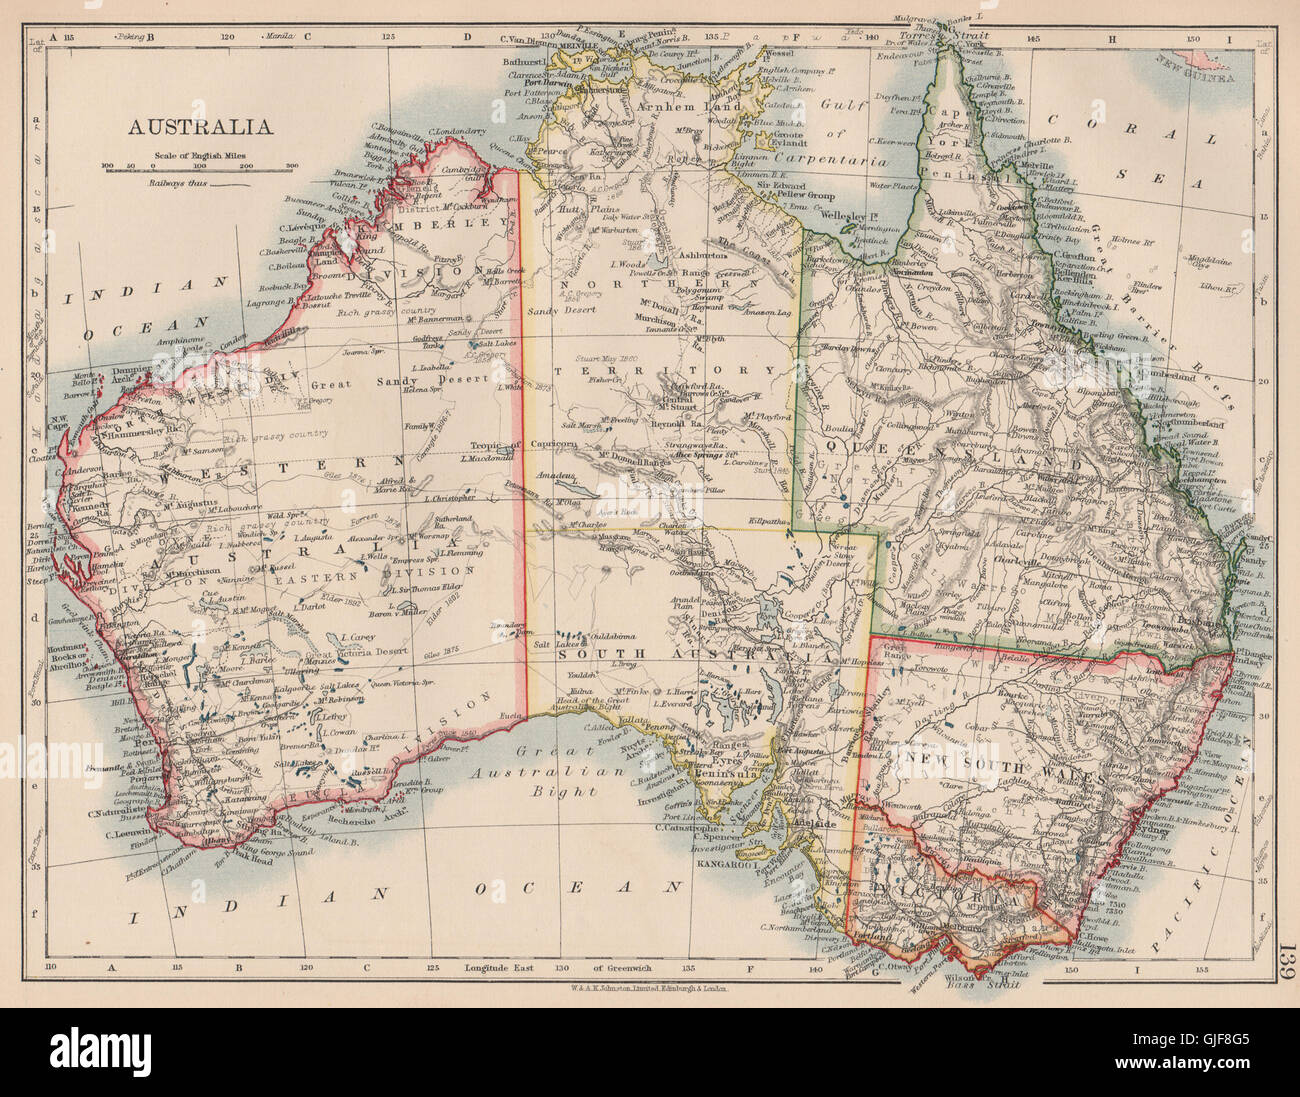 AUSTRALIA. States. Showing Northern Territory within SA. JOHNSTON, 1906 map Stock Photo